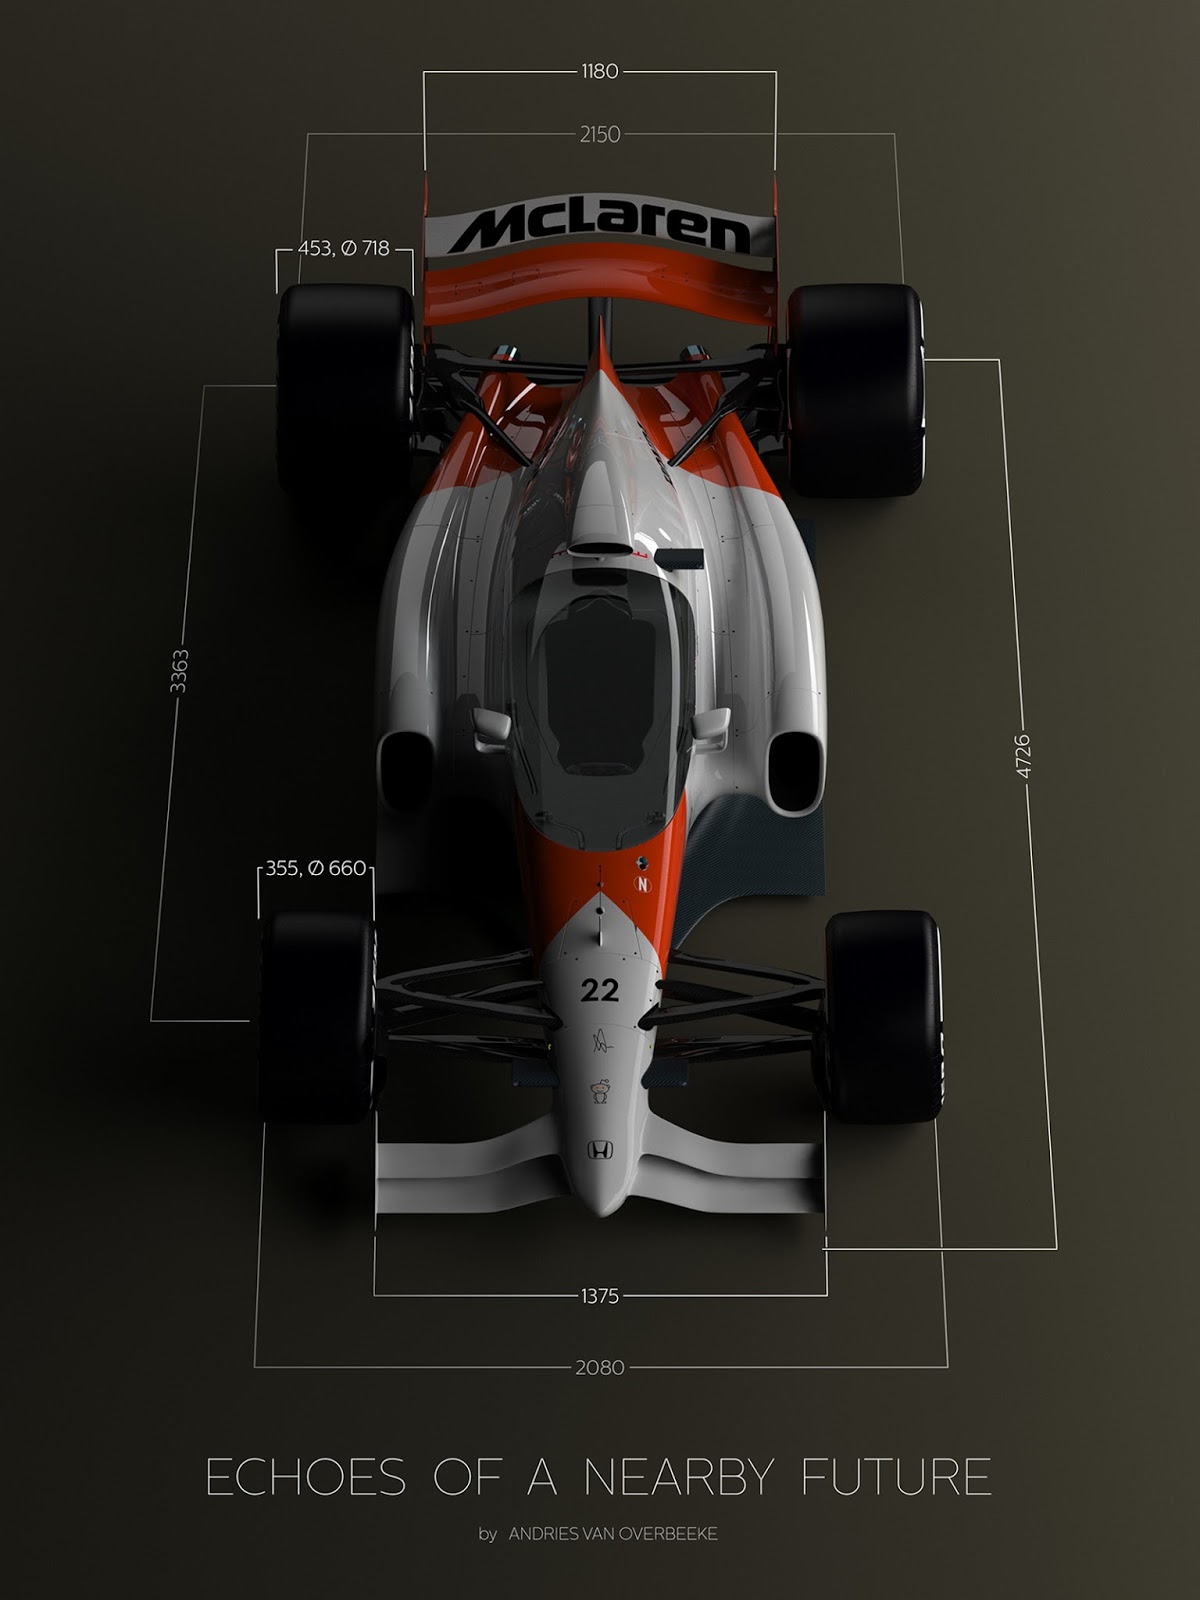 future-formula-1-concept-earns-closed-cockpit-honda-mclaren-livery-photo-gallery_13